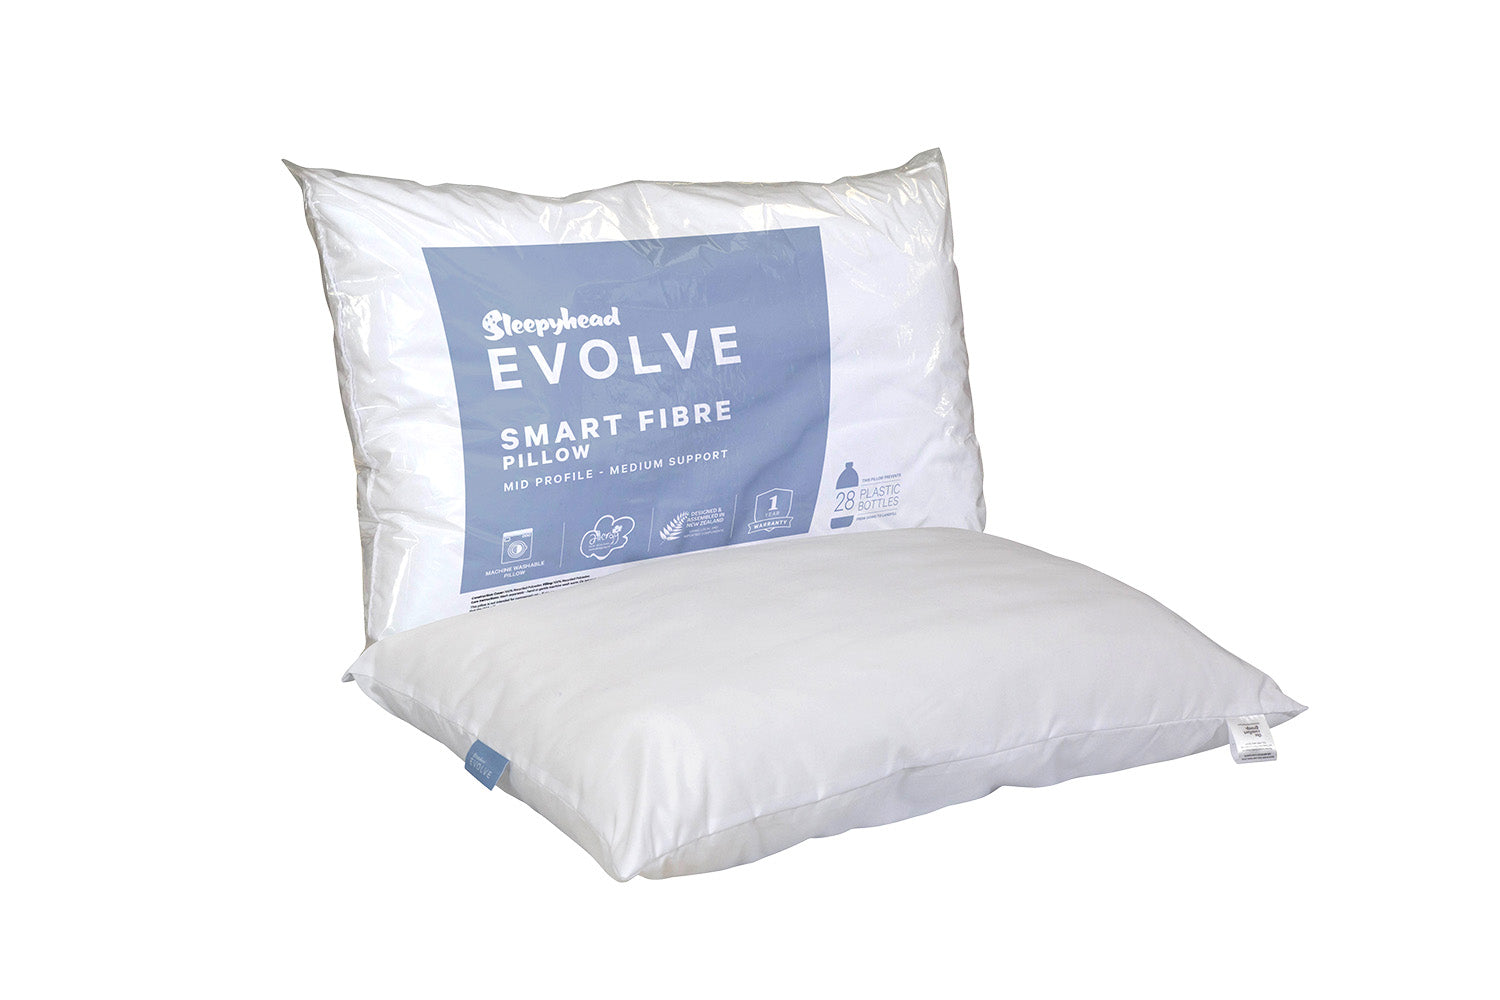 Sleepyhead Evolve Pillows